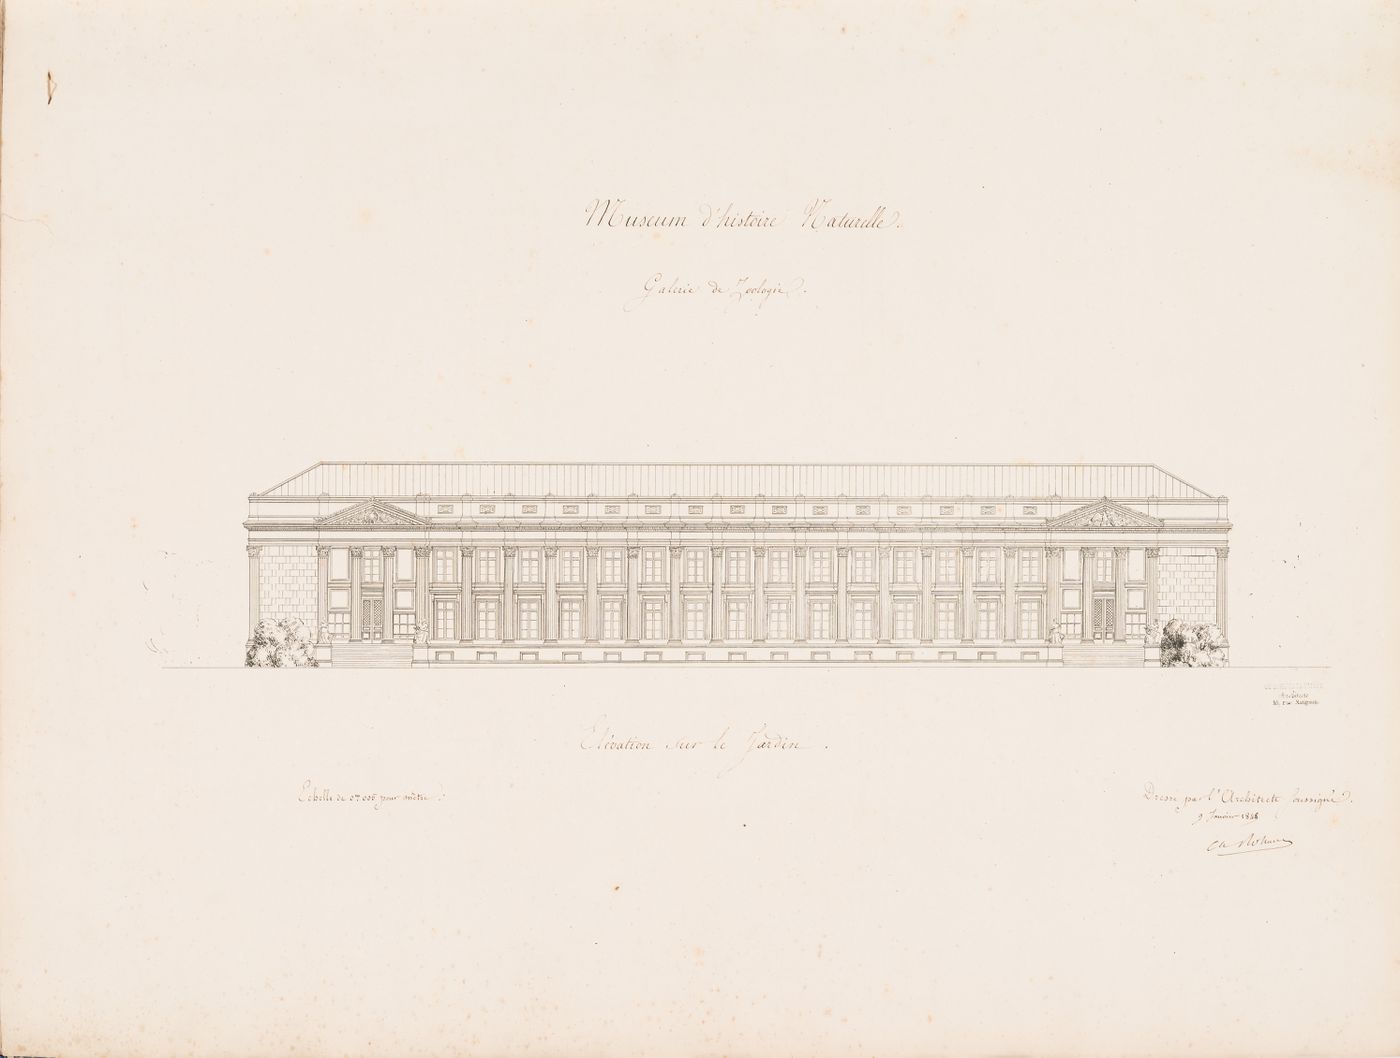 Project for a Galerie de zoologie, 1846: Principal elevation